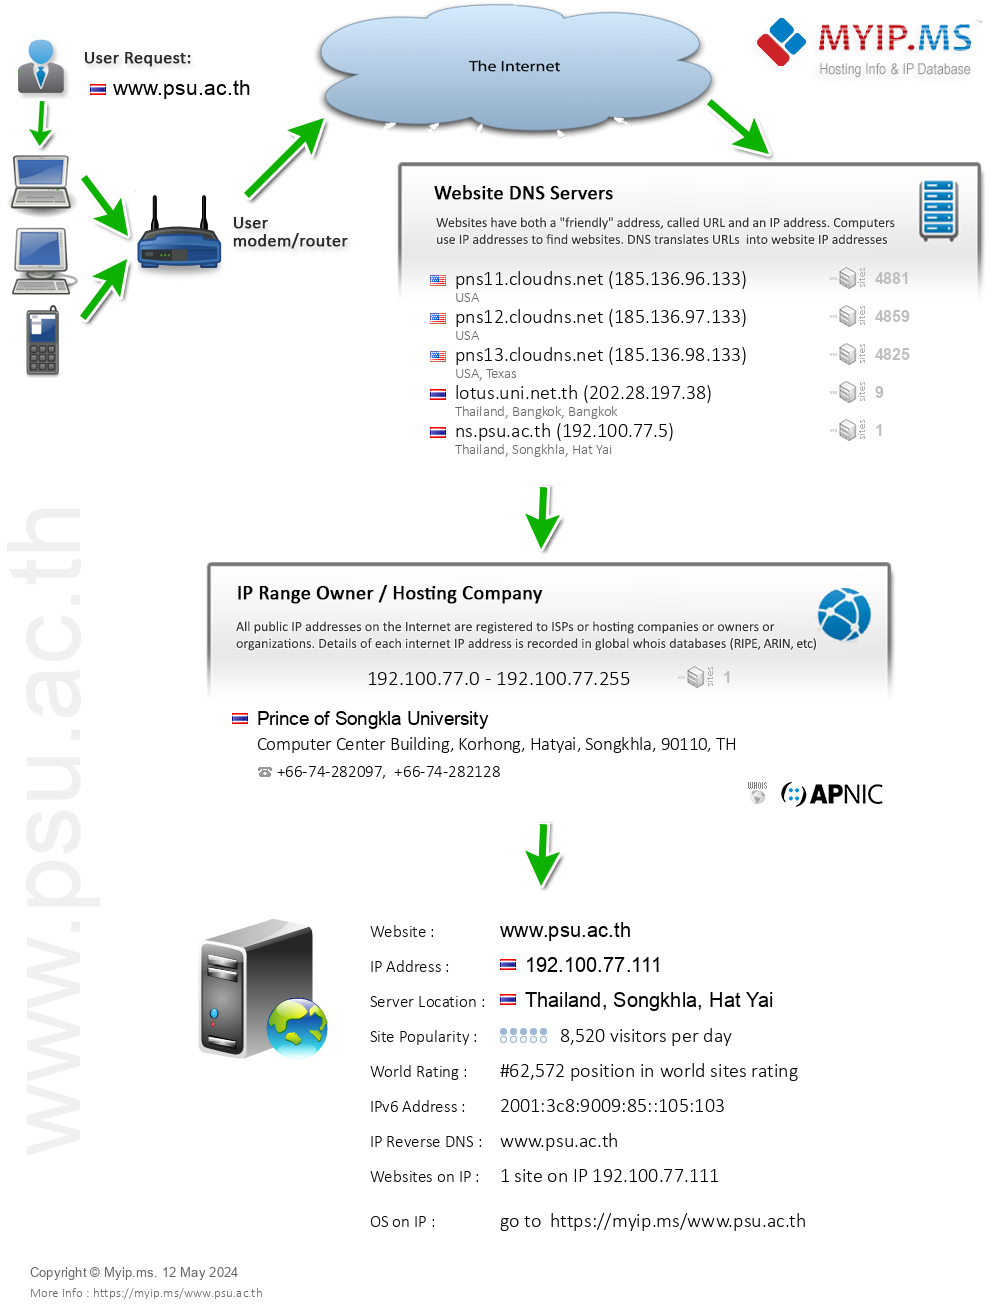 Psu.ac.th - Website Hosting Visual IP Diagram